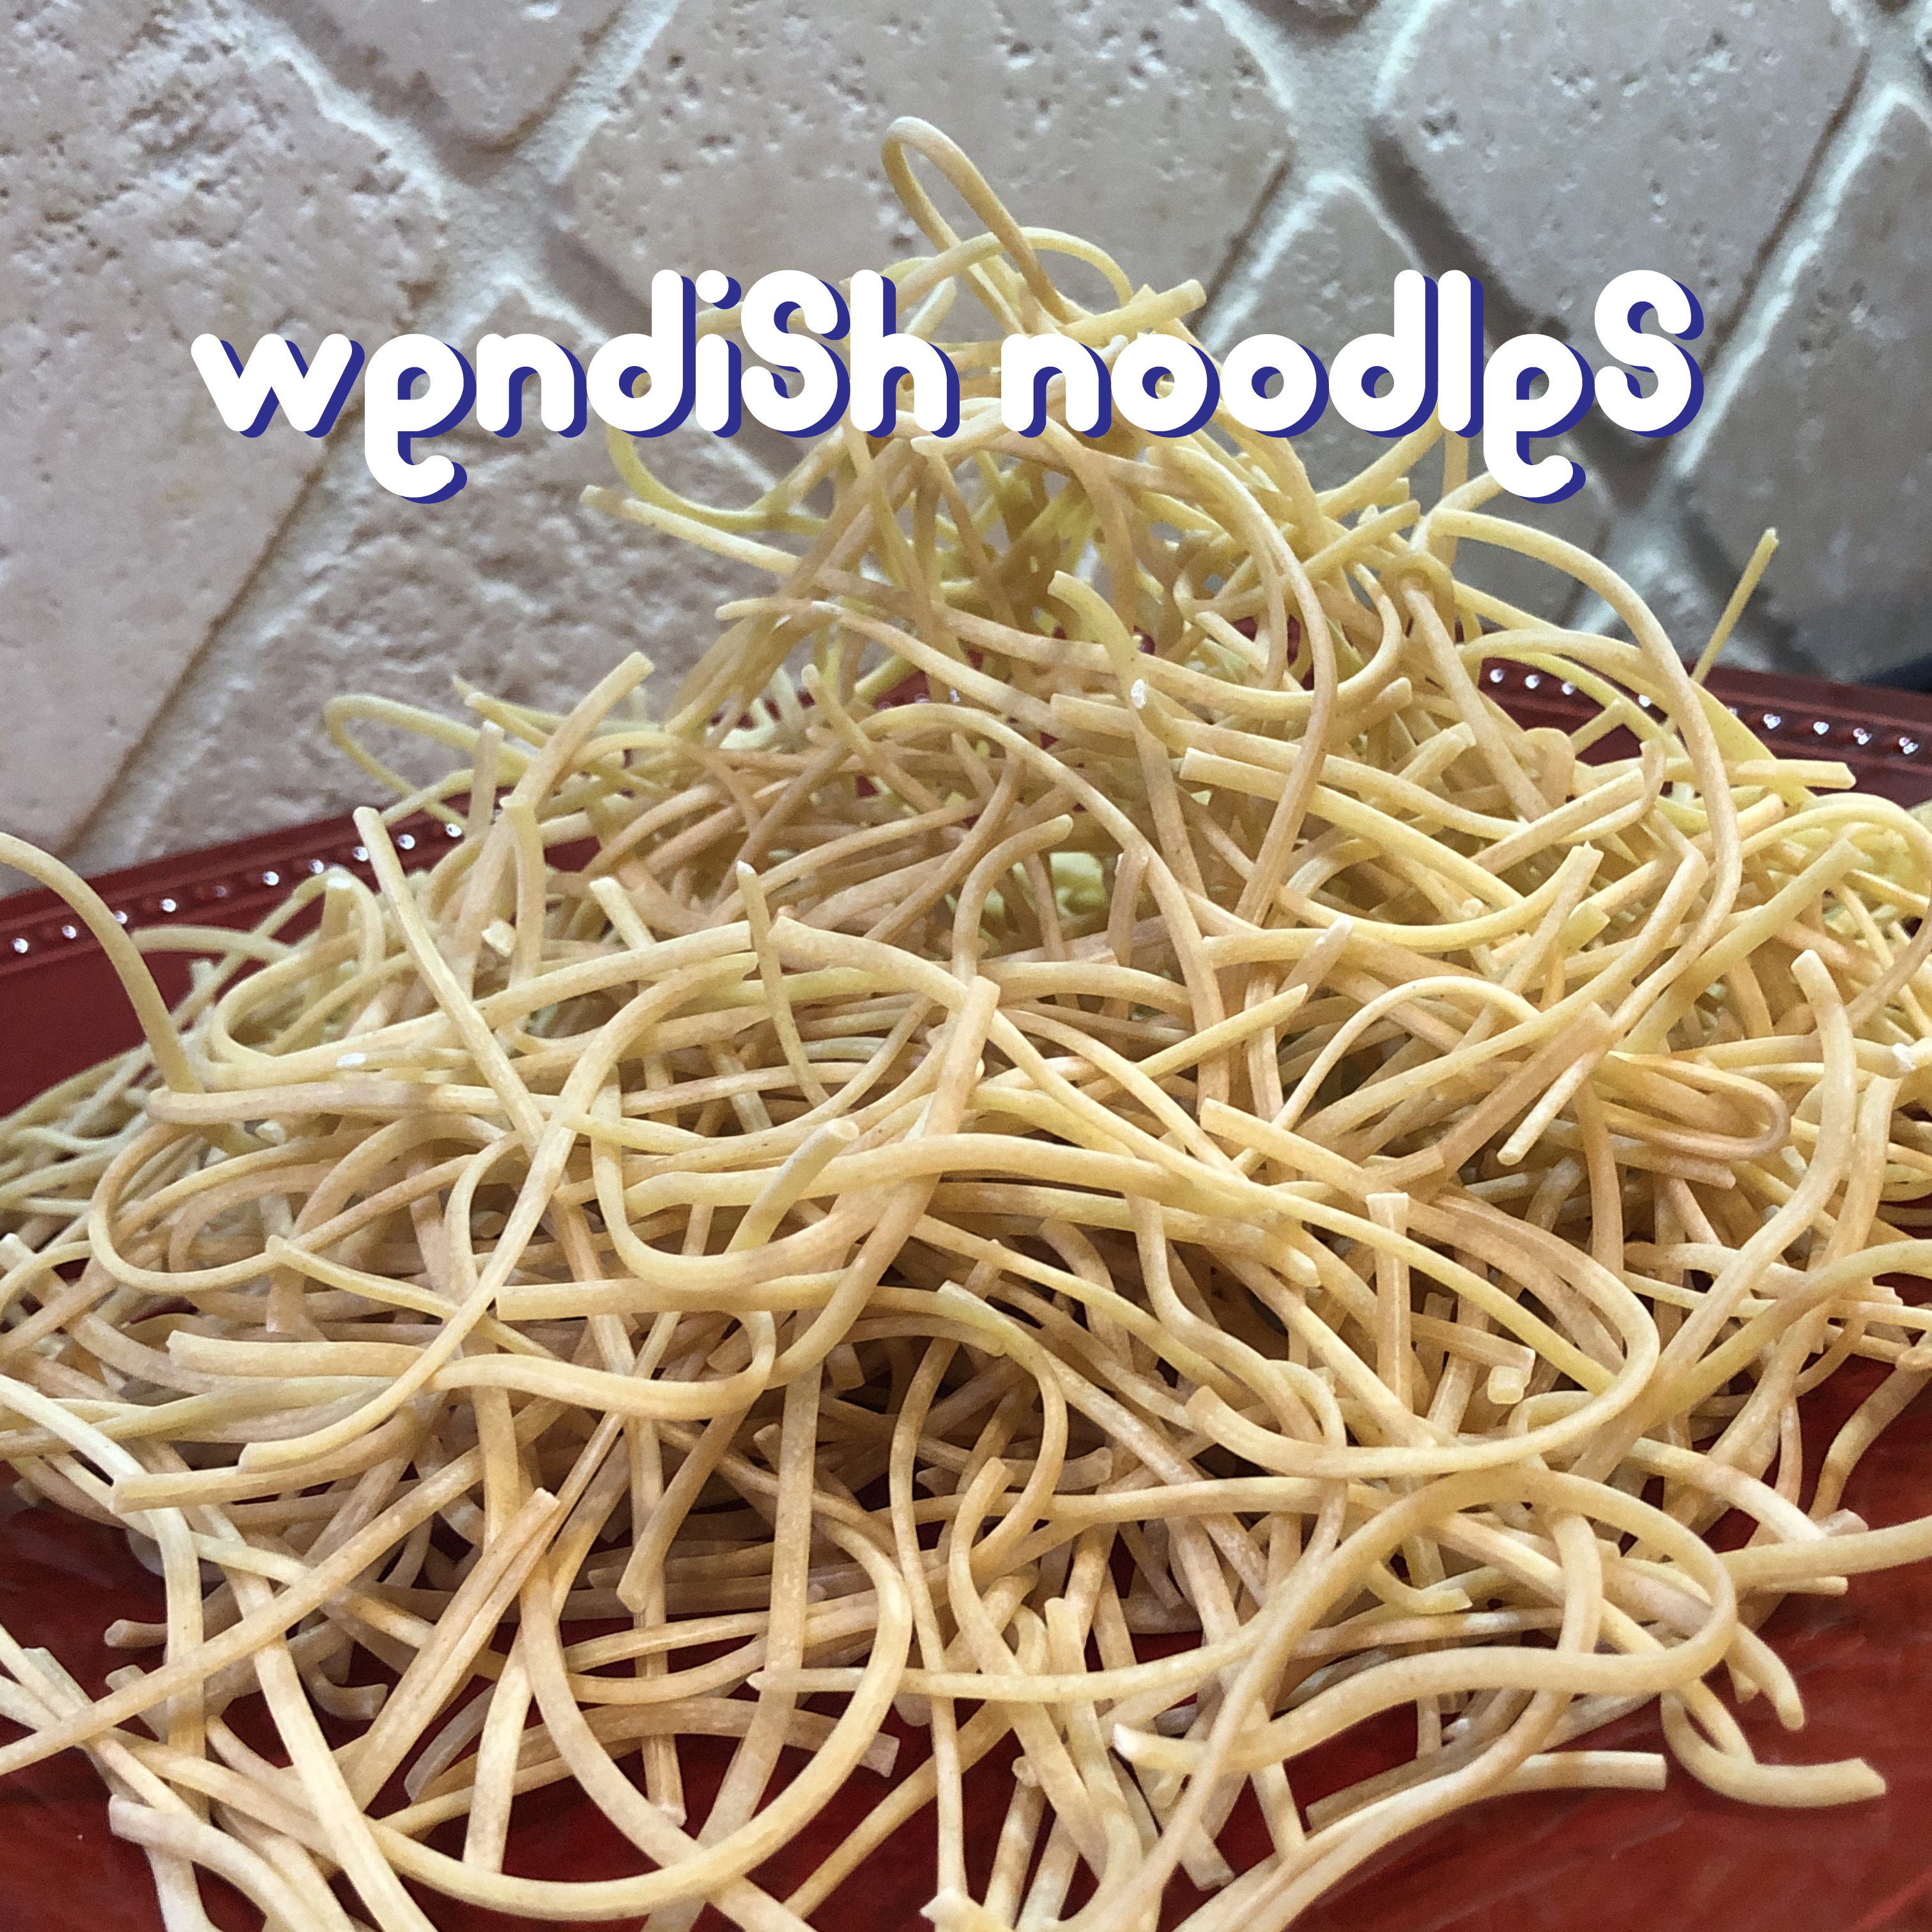 Texas Wendish Noodles